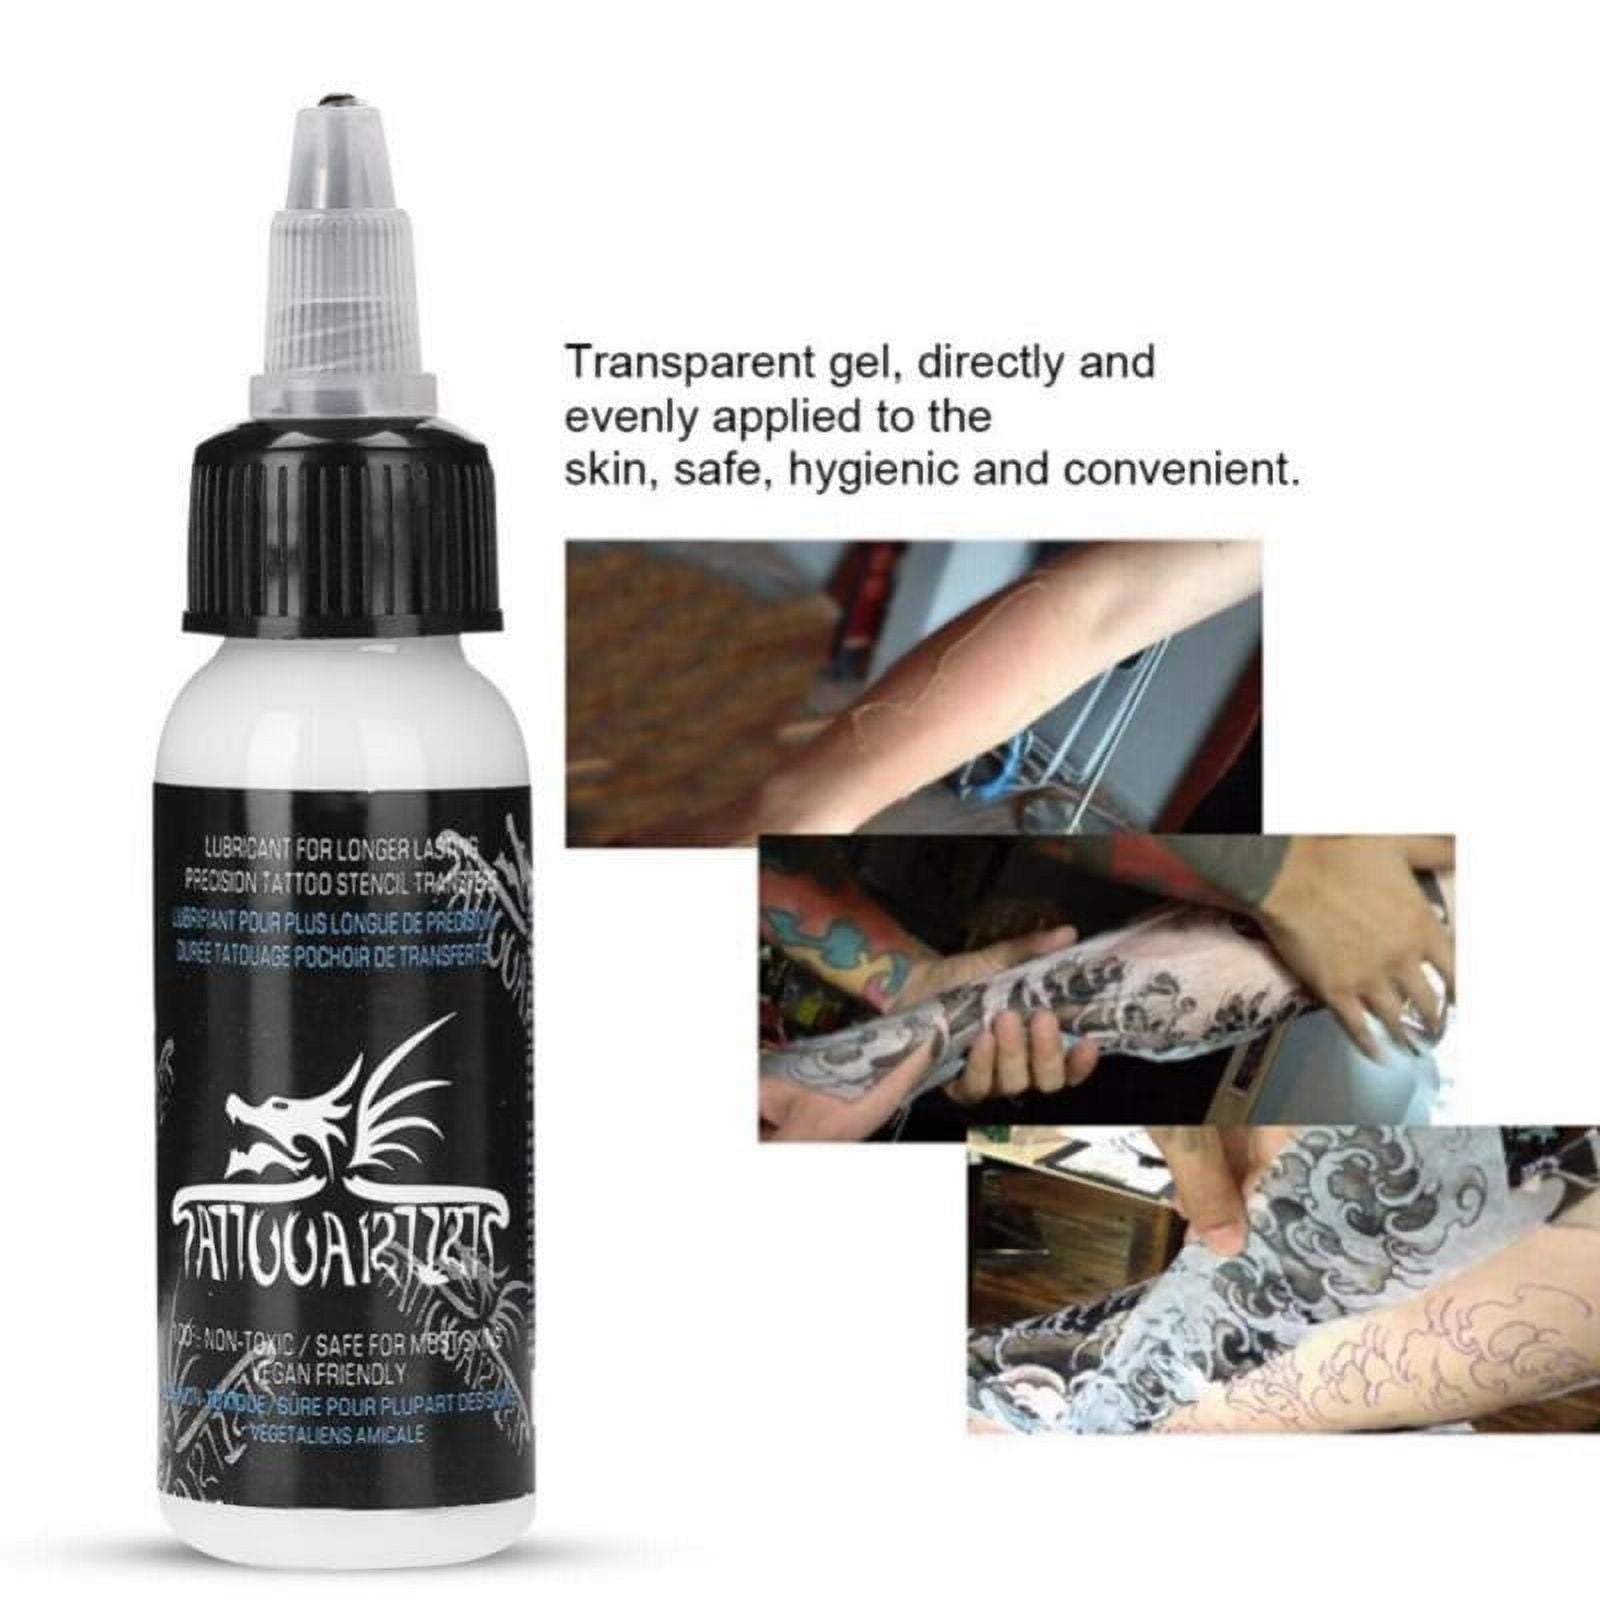 Stencil Stuff Tattoo Transfer Gel Stick,75g Tattoo Transfer Cream Clear  Patterns Light Fragrance Safe Ingredients Tattoo Supplies Accessories For